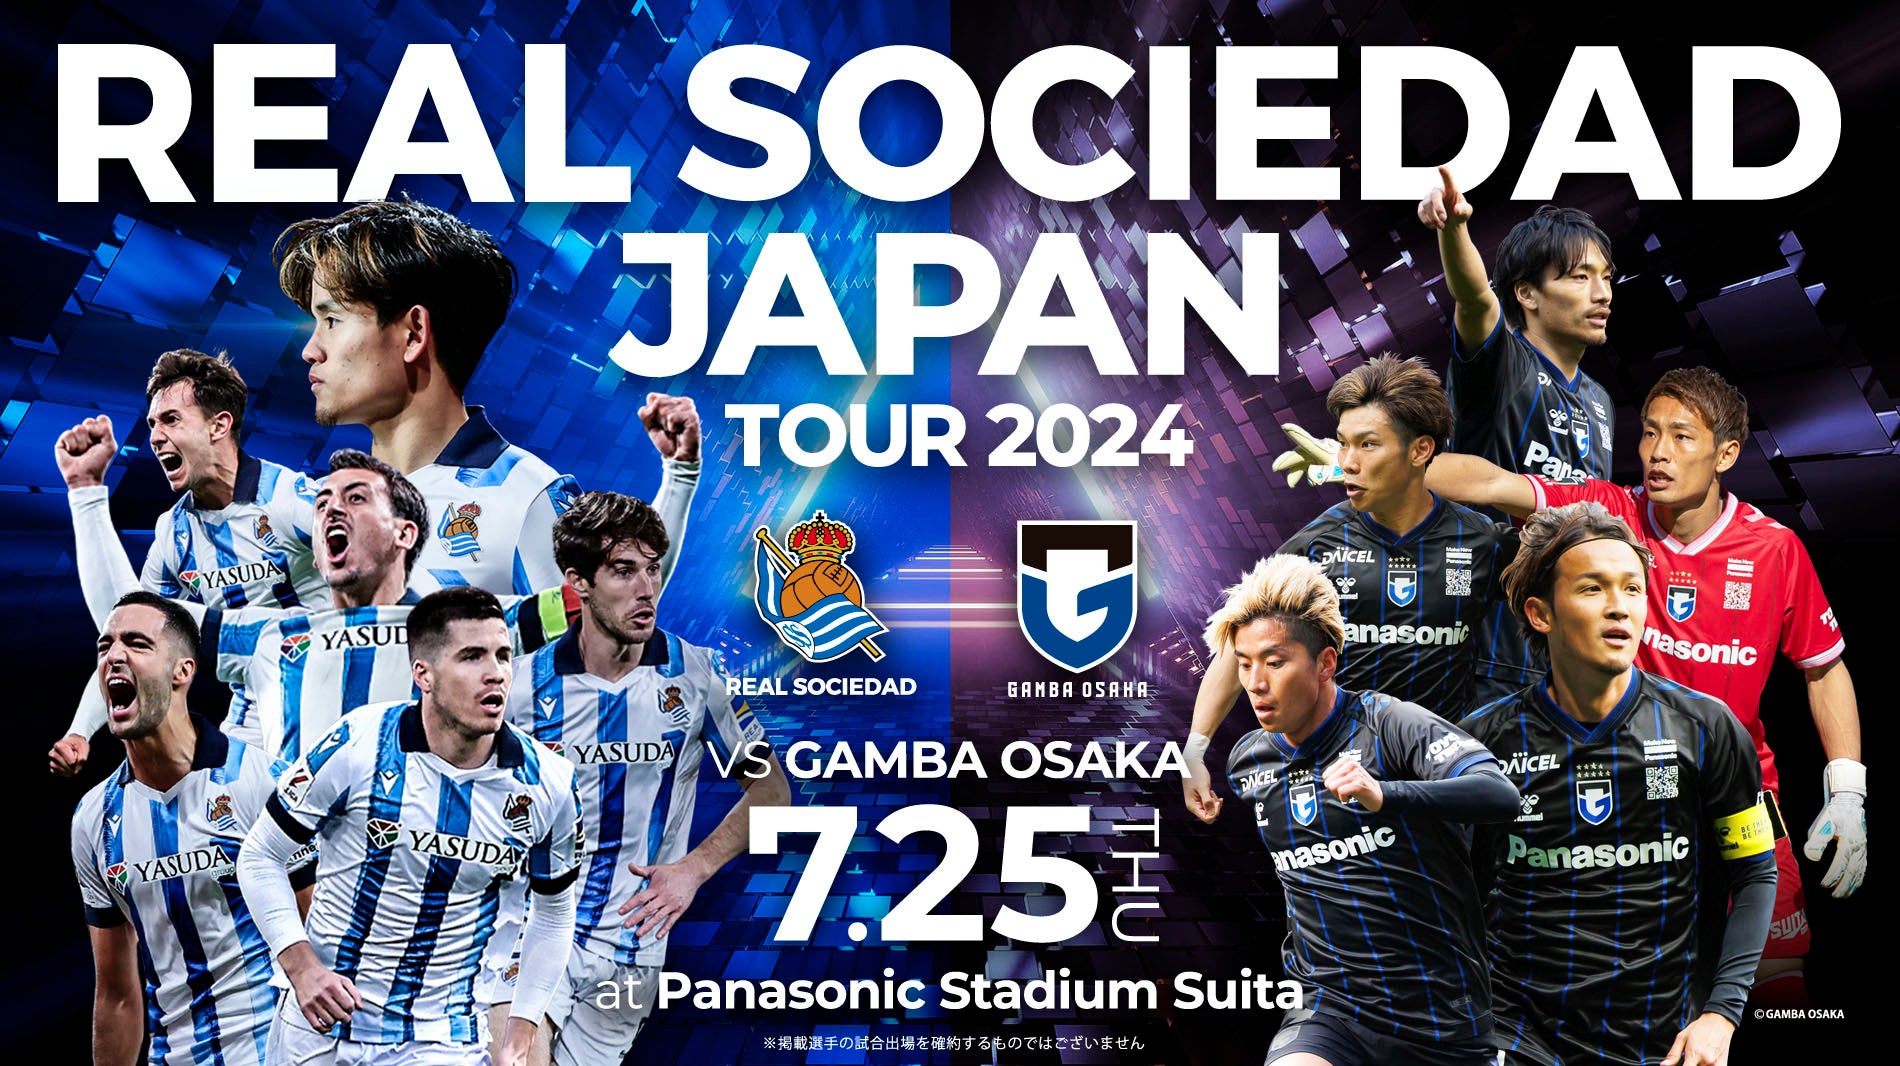 Real Sociedad Japan Tour 2024にて「レアル・ソシエダ vs ガンバ大阪」開催決定のお知らせ